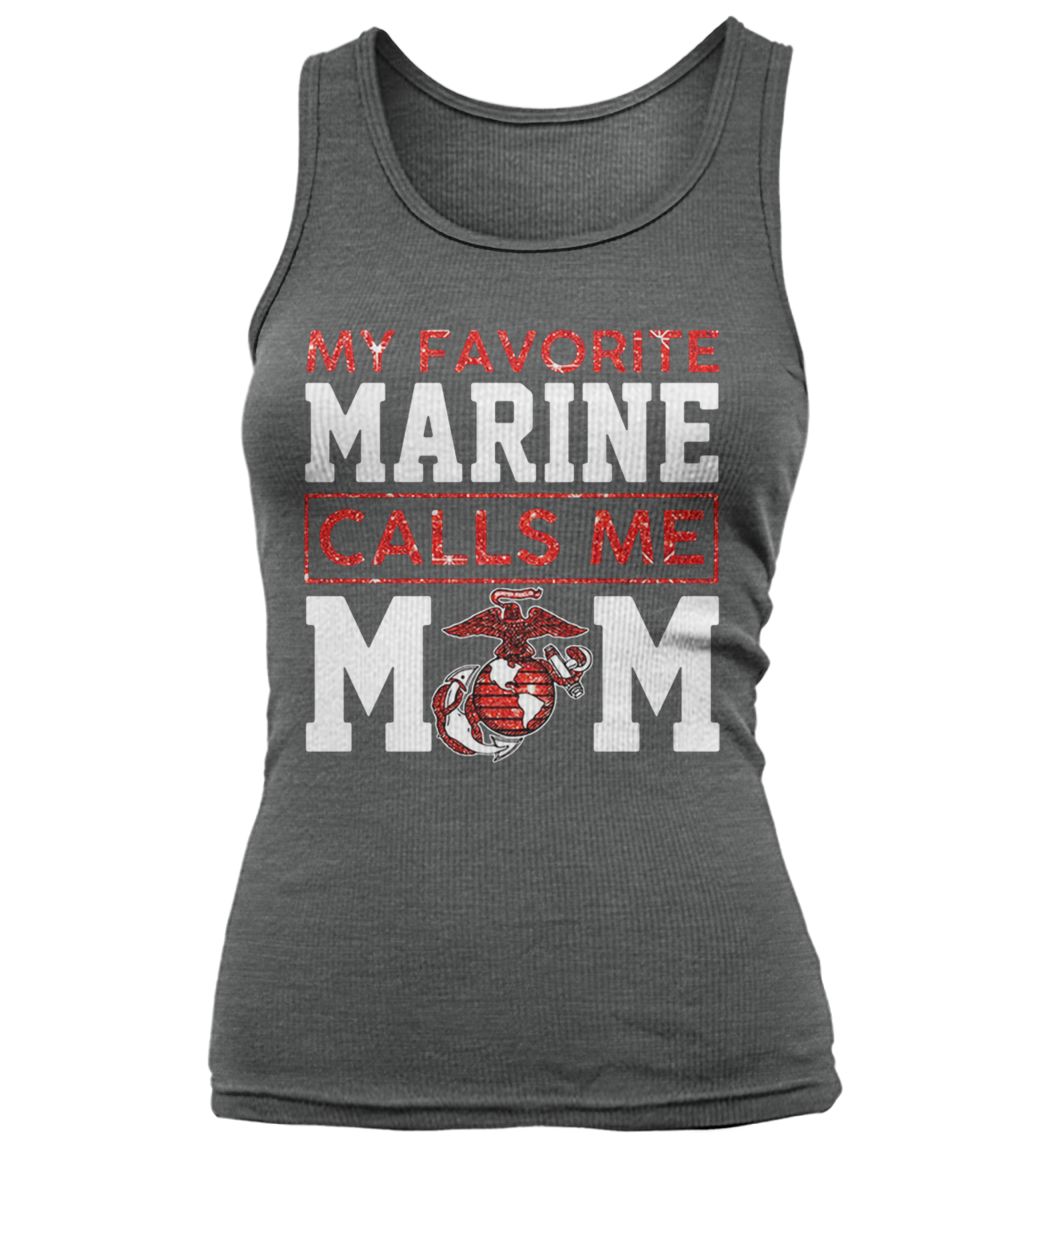 My favorite marine calls me mom women's tank top